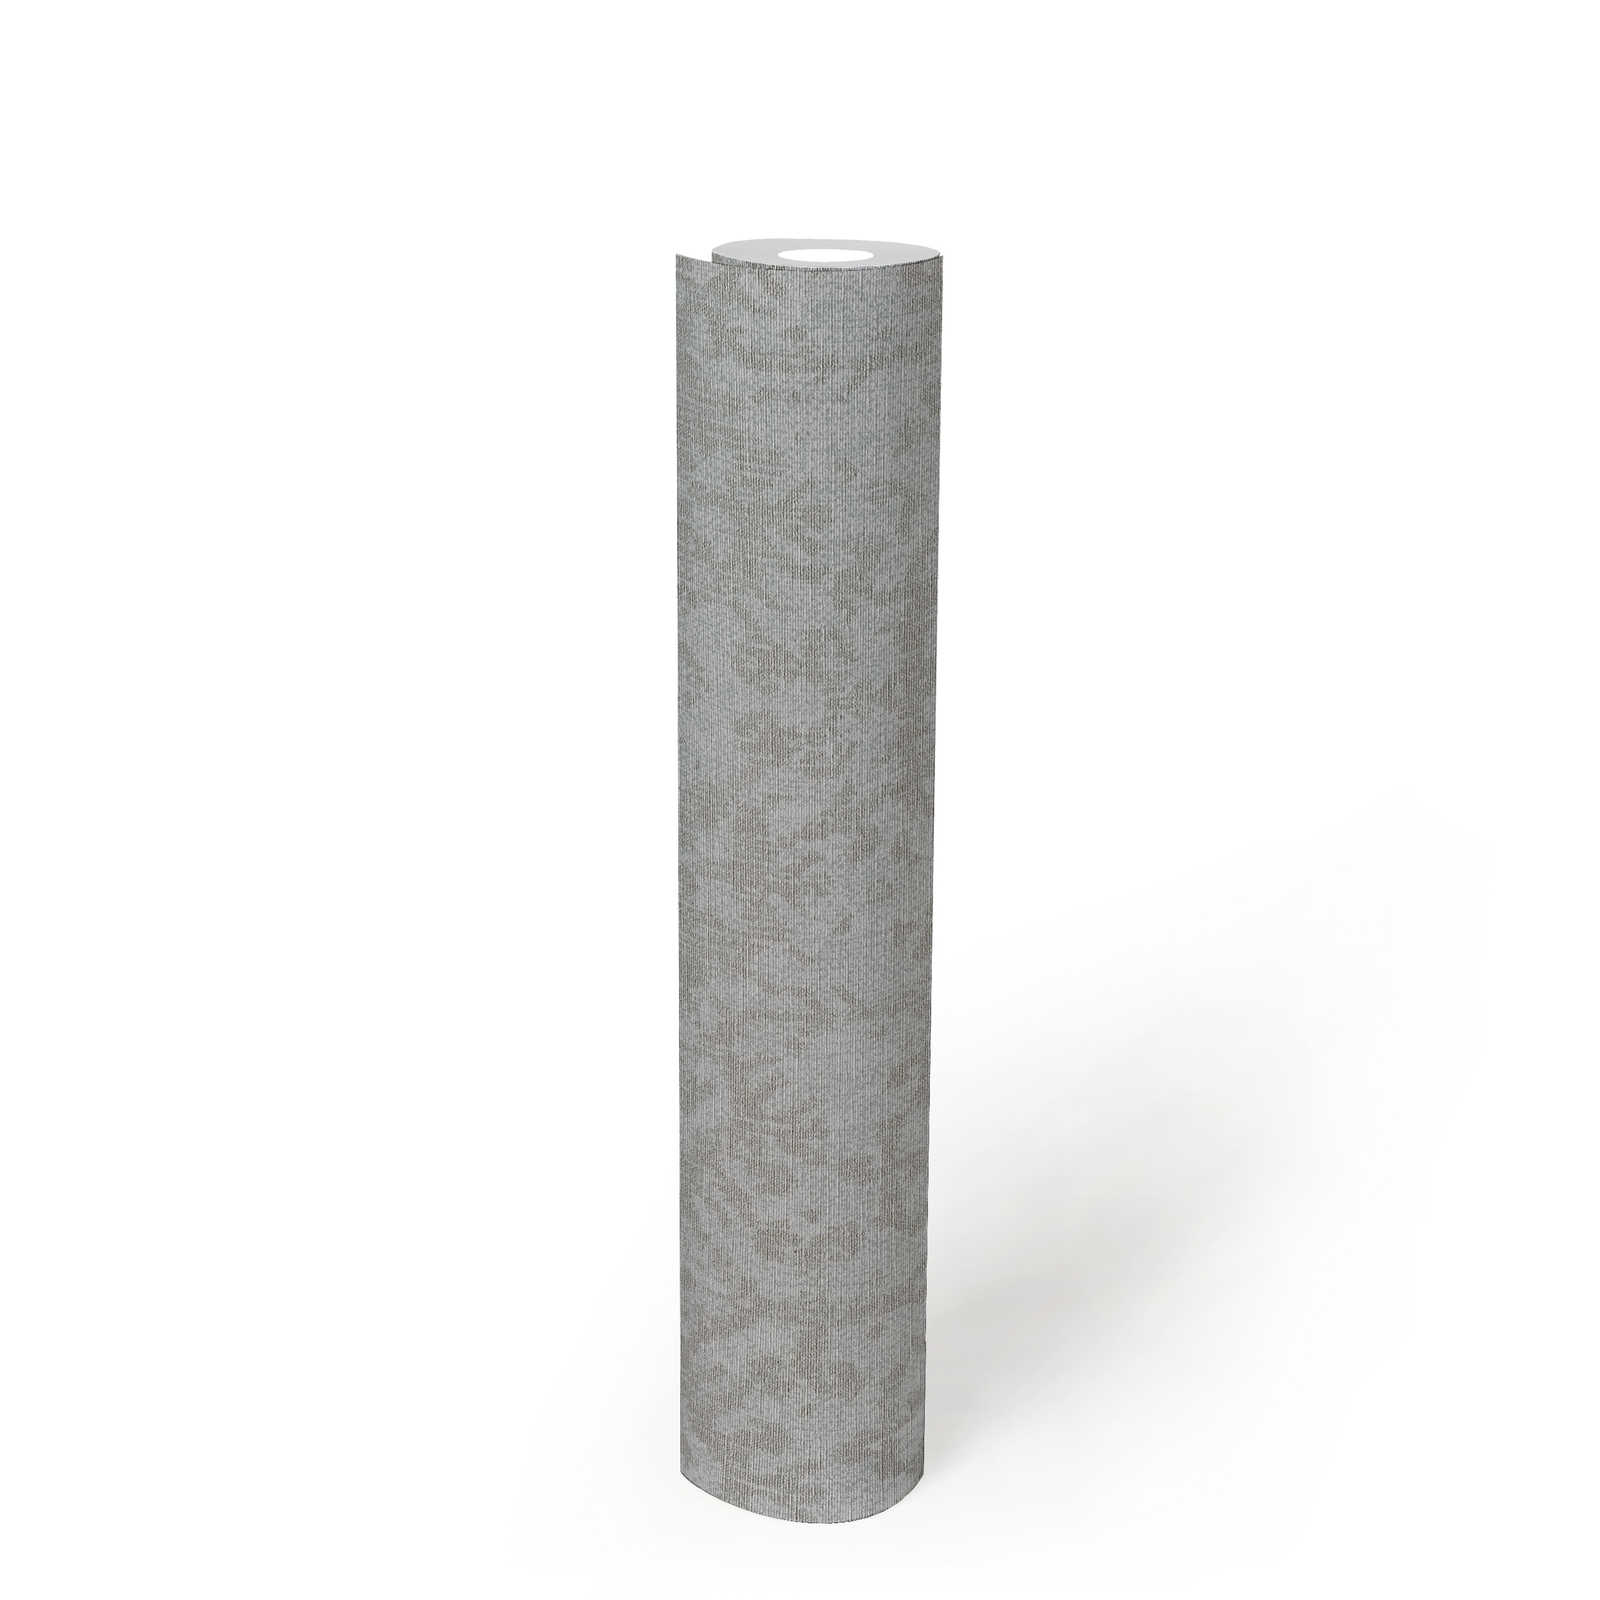             Textiloptik Tapete Ethno Ornament Muster – Grau
        